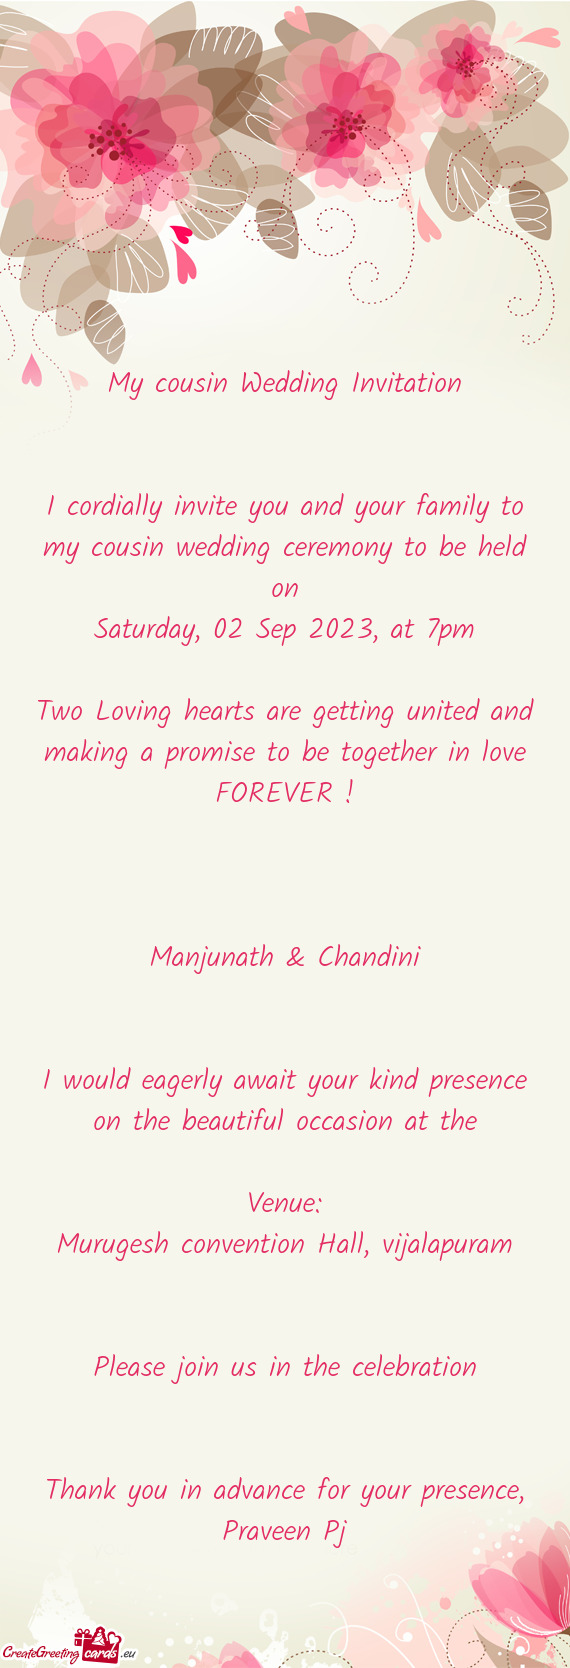 My cousin Wedding Invitation